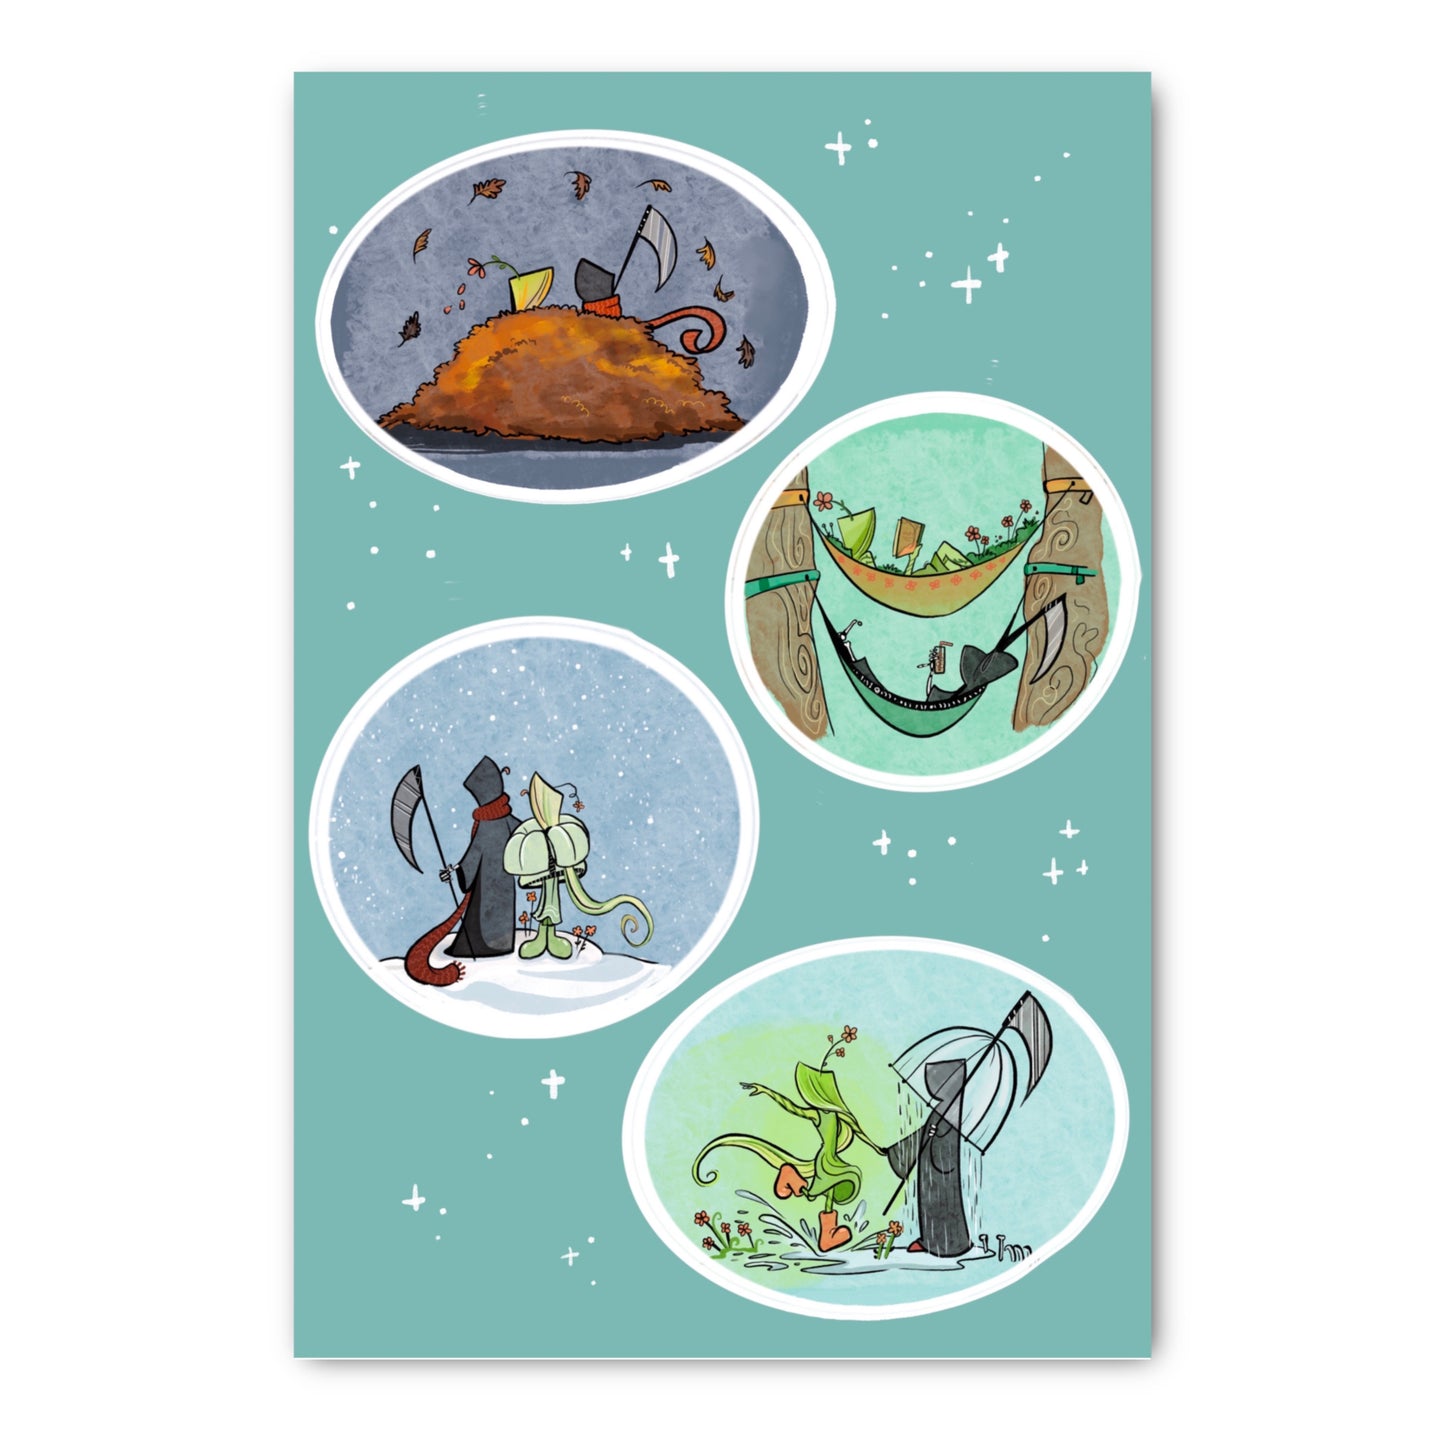 Grim Reaper and Life seasons activities -Sticker Sheet